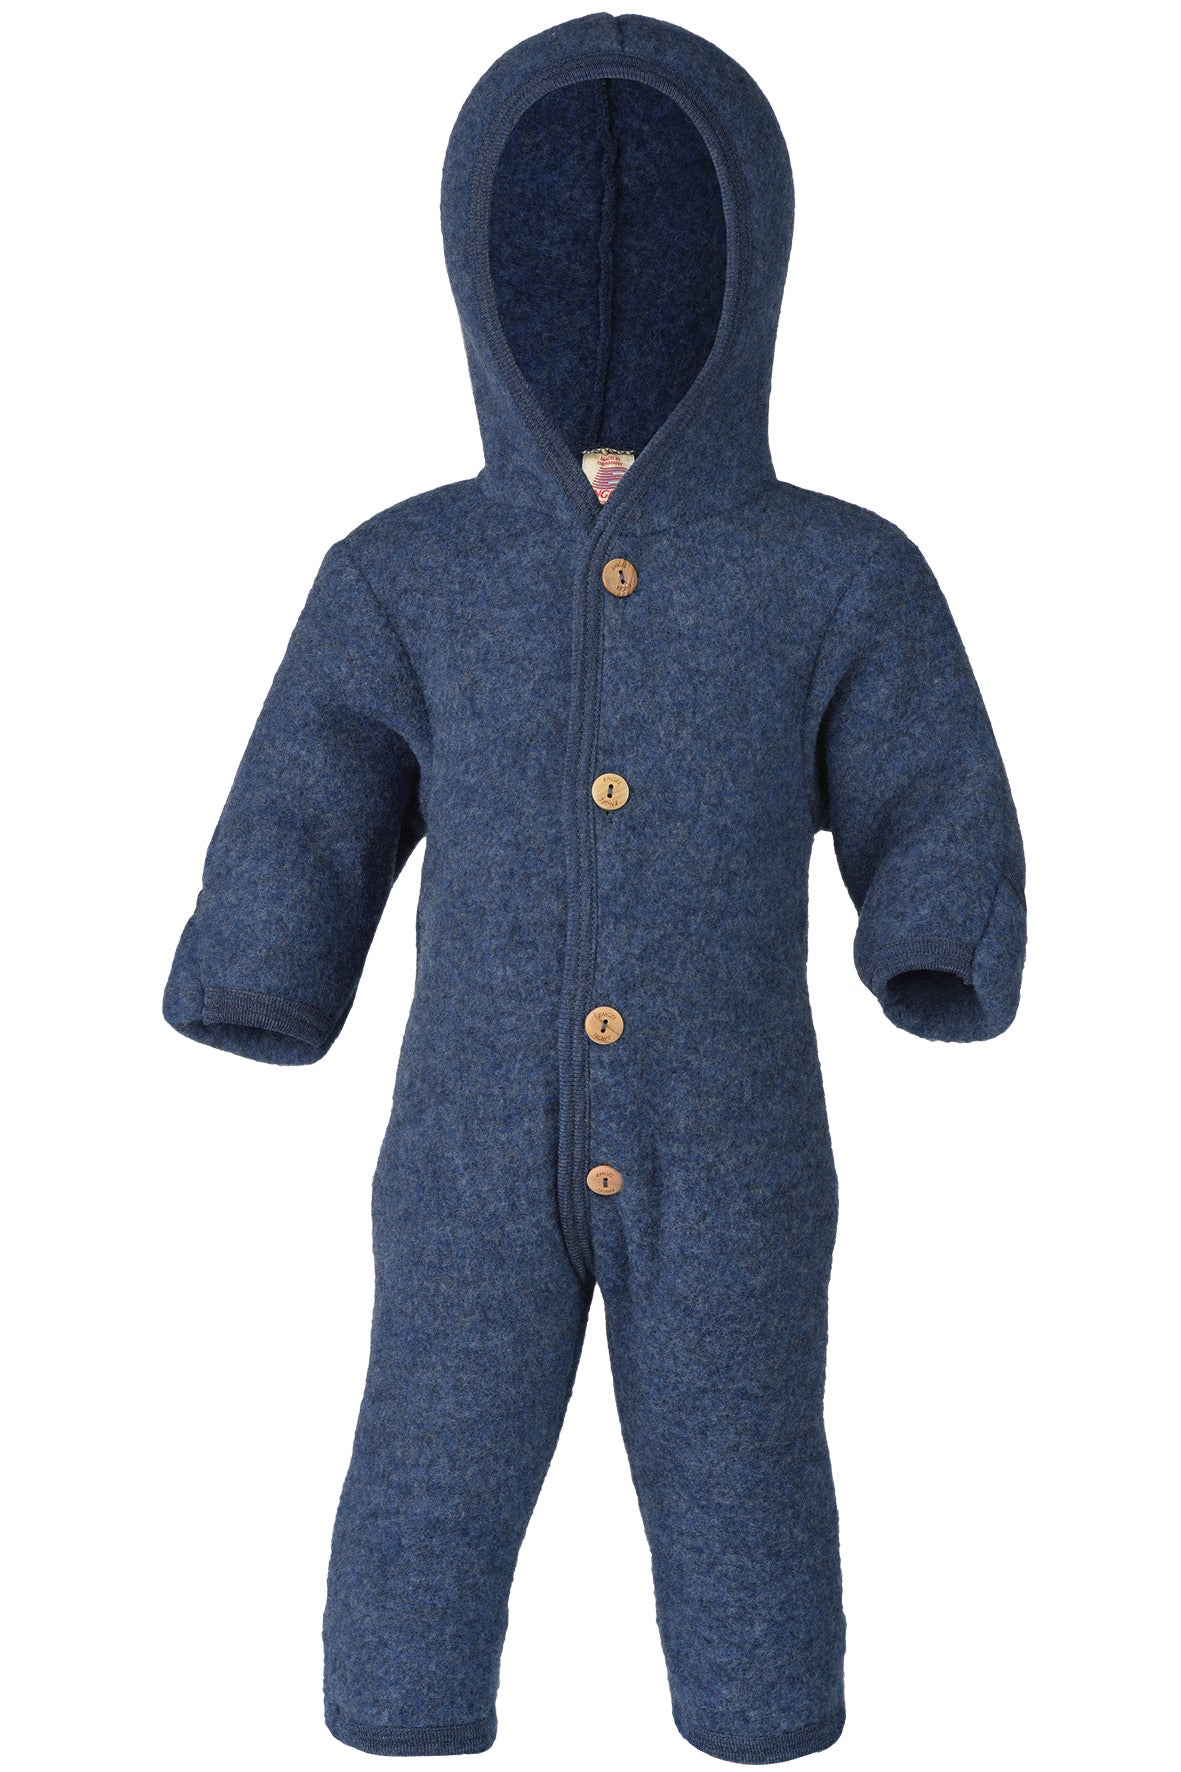 Hooded wool fleece overall in blue melange